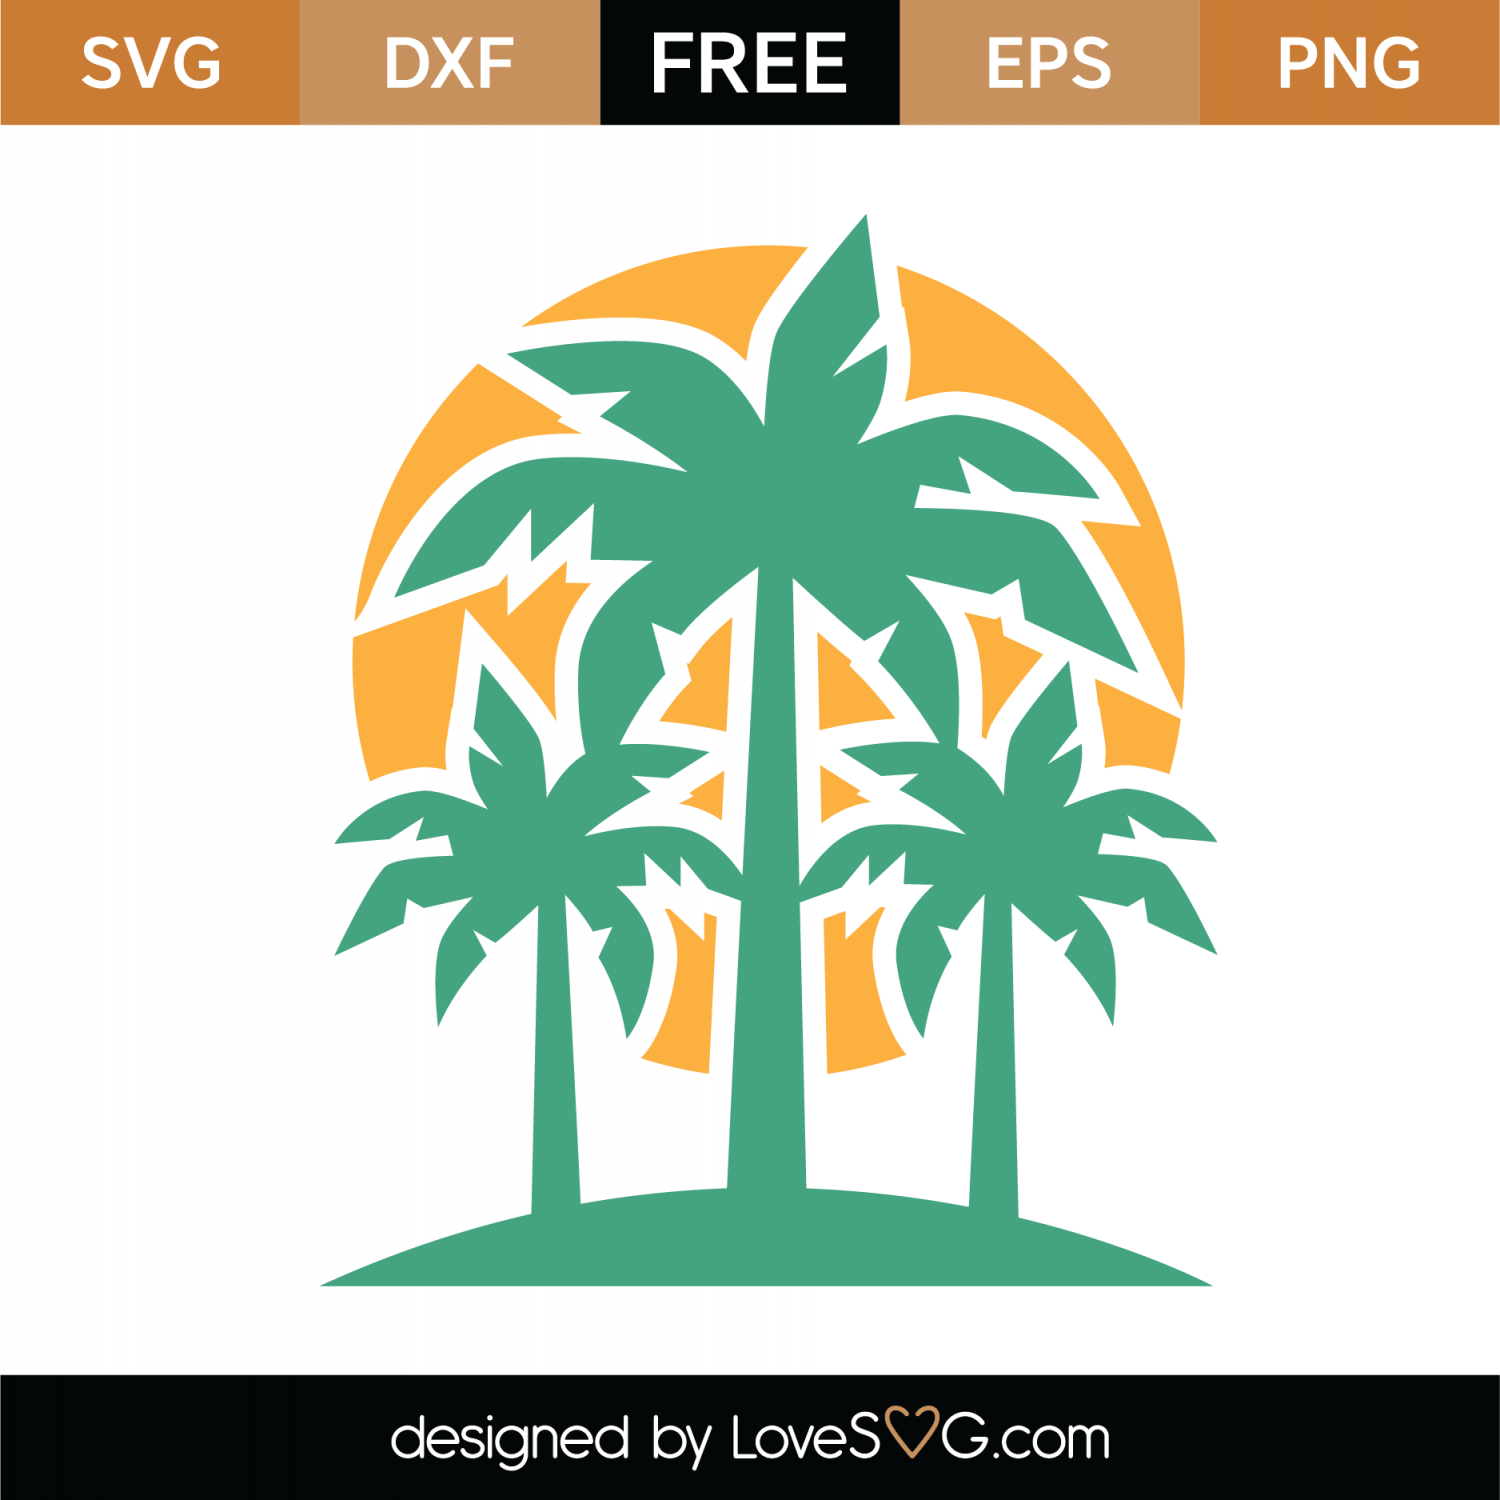 Download Free Palm Trees SVG Cut File | Lovesvg.com